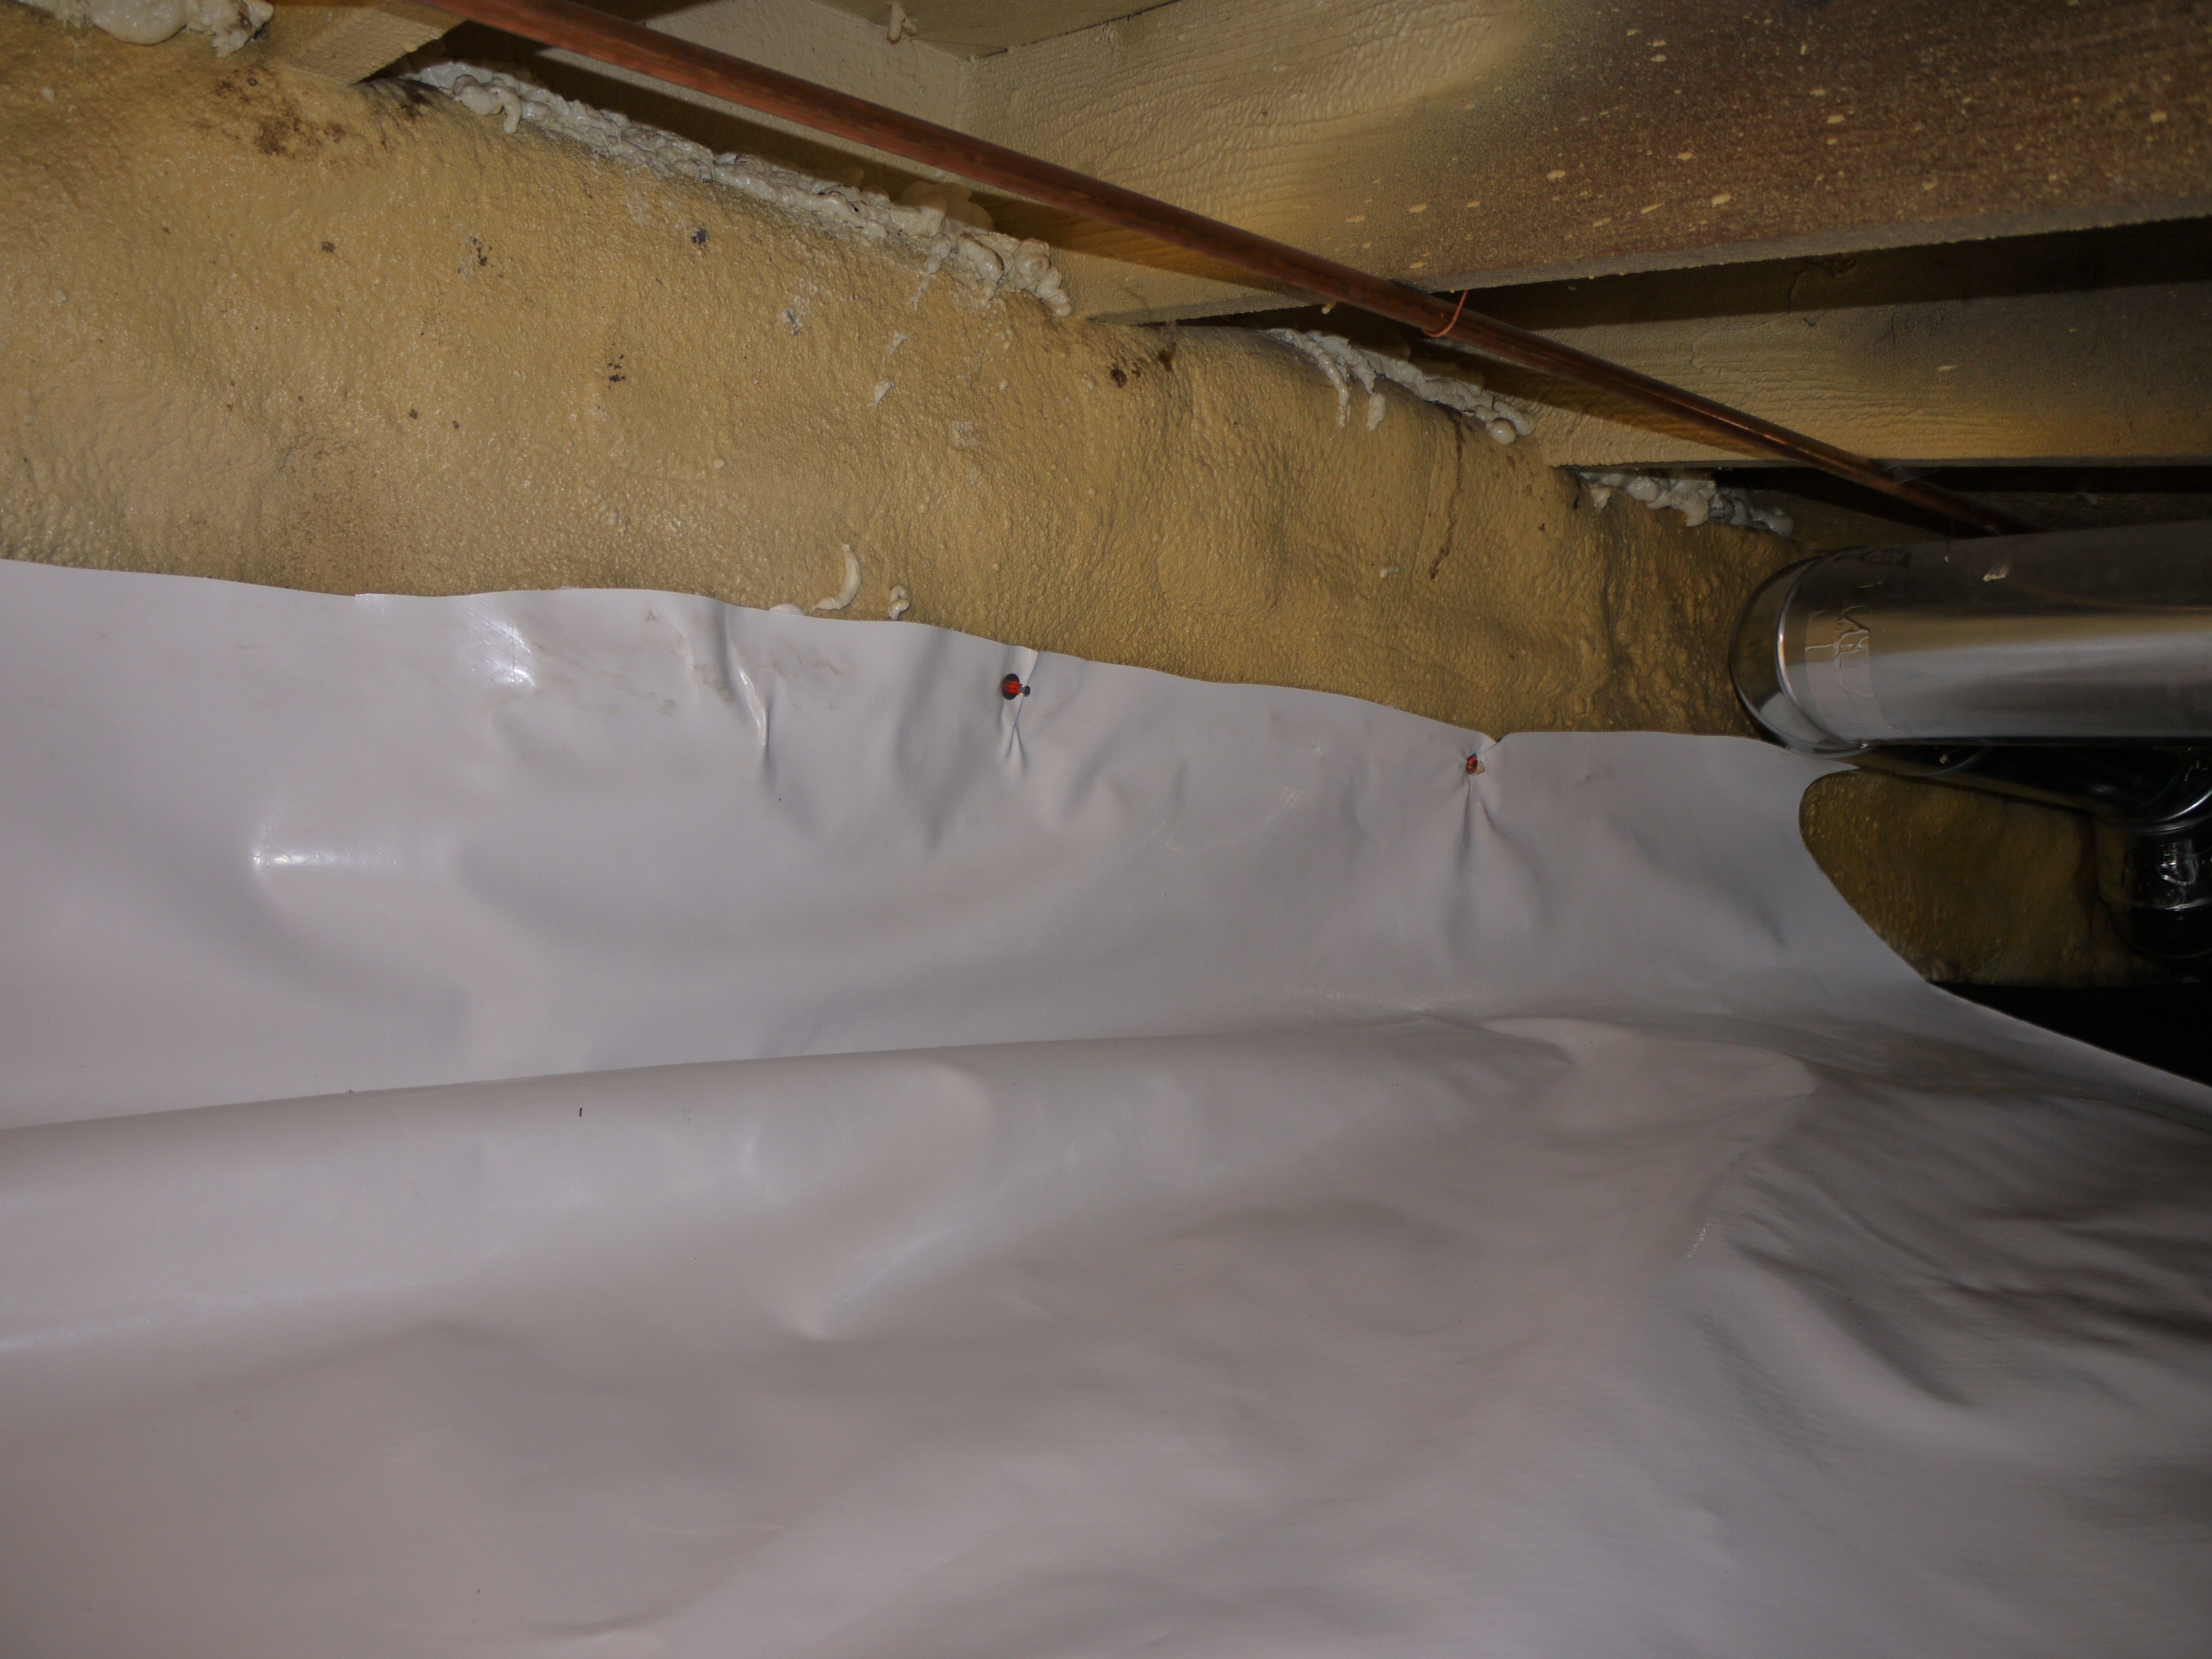 crawl barrier vapor space diy attached cabin walls moisture ramset nails install powder cabindiy